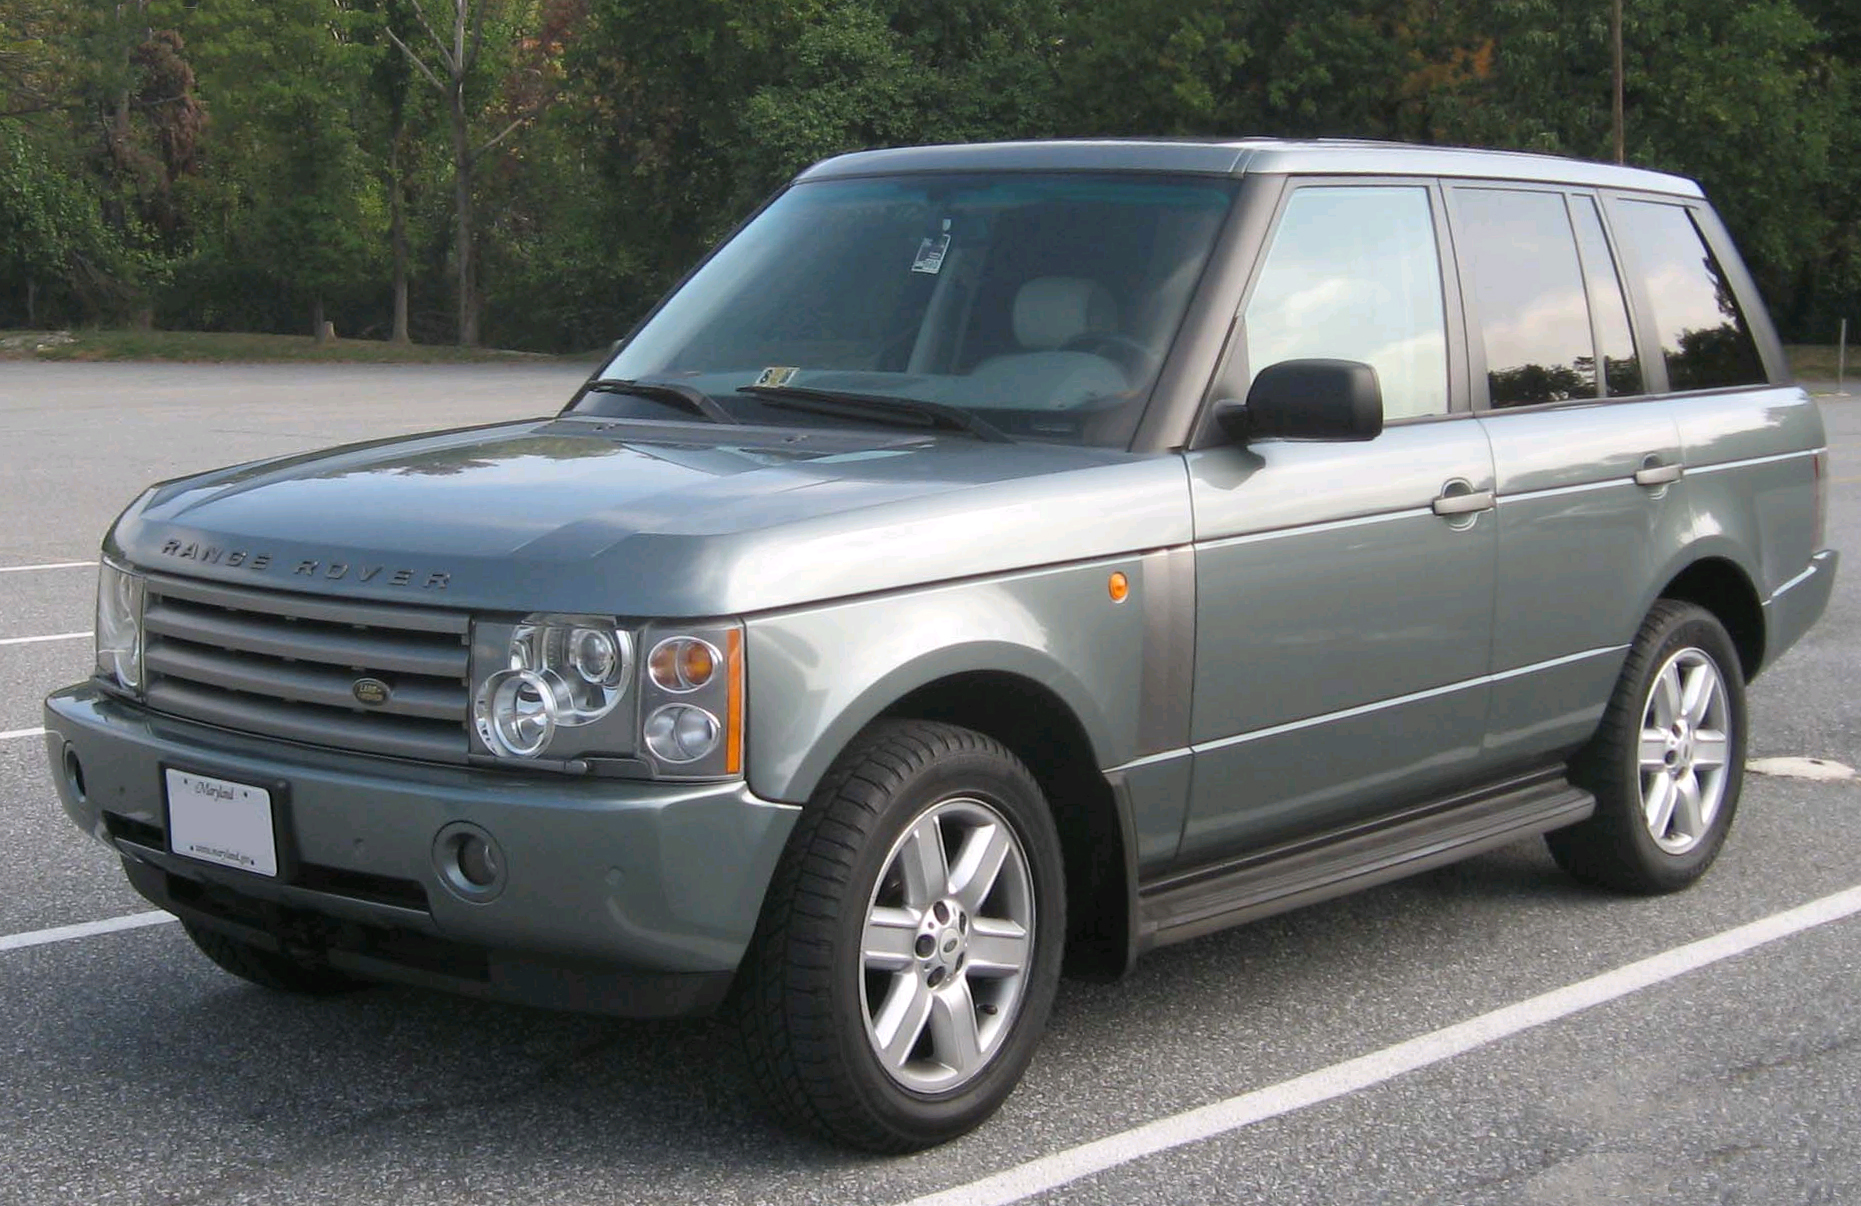 Range Rover - Wikipedia